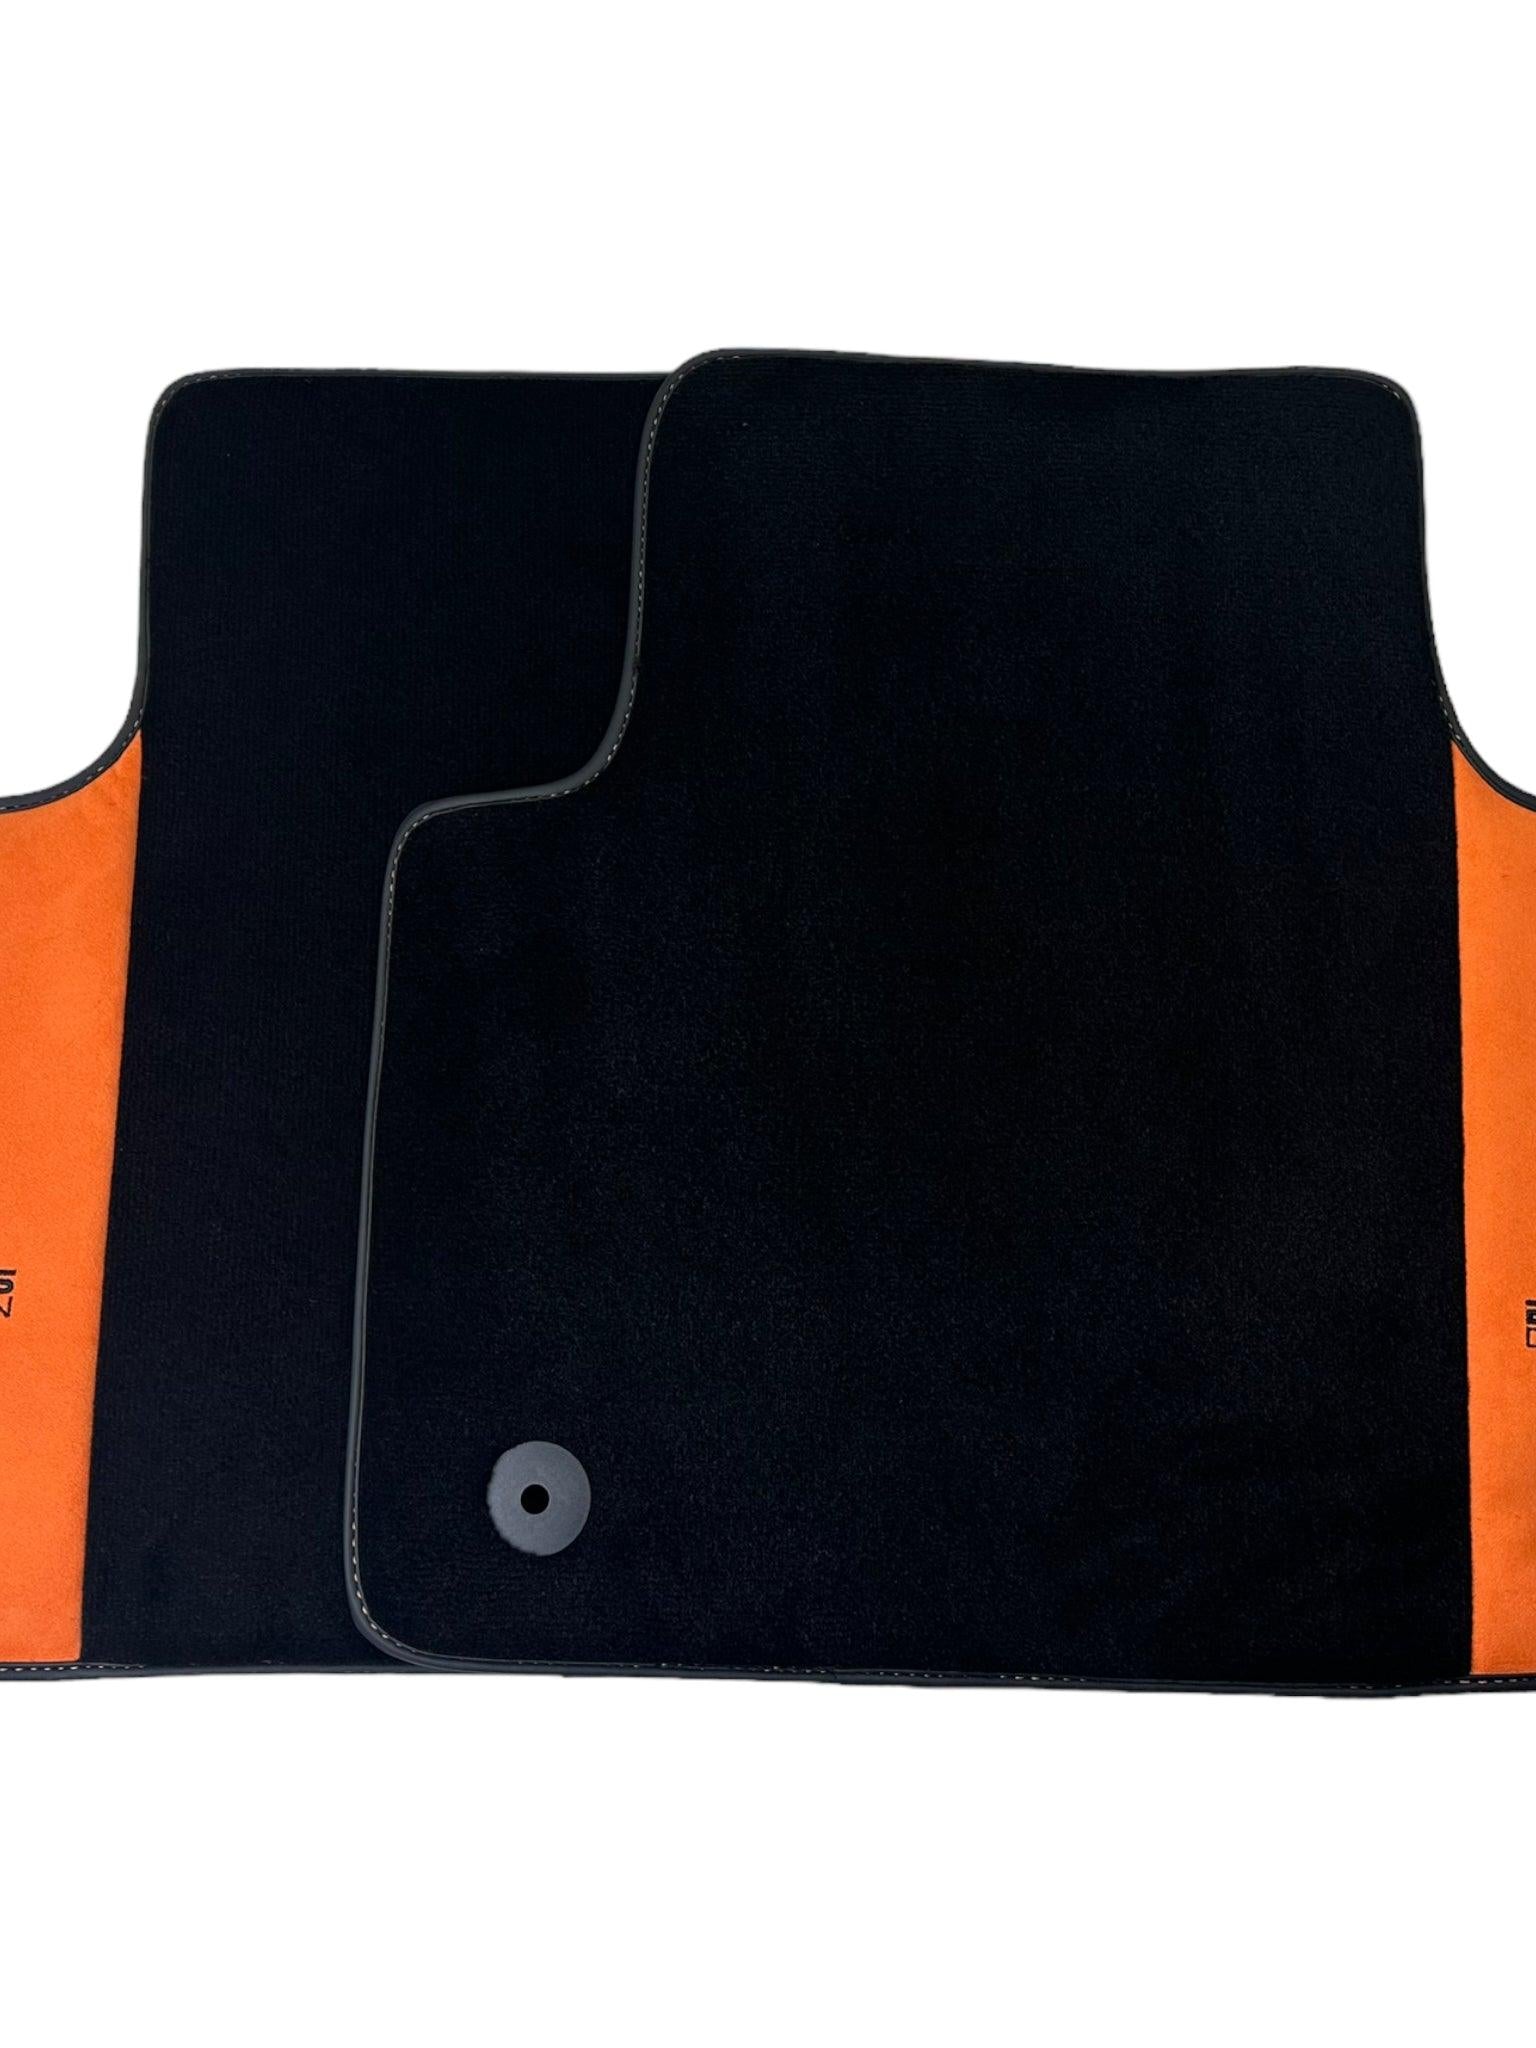 Black Floor Mats for Porsche Cayenne (2003-2010) with Orange Alcantara Leather ER56 Design